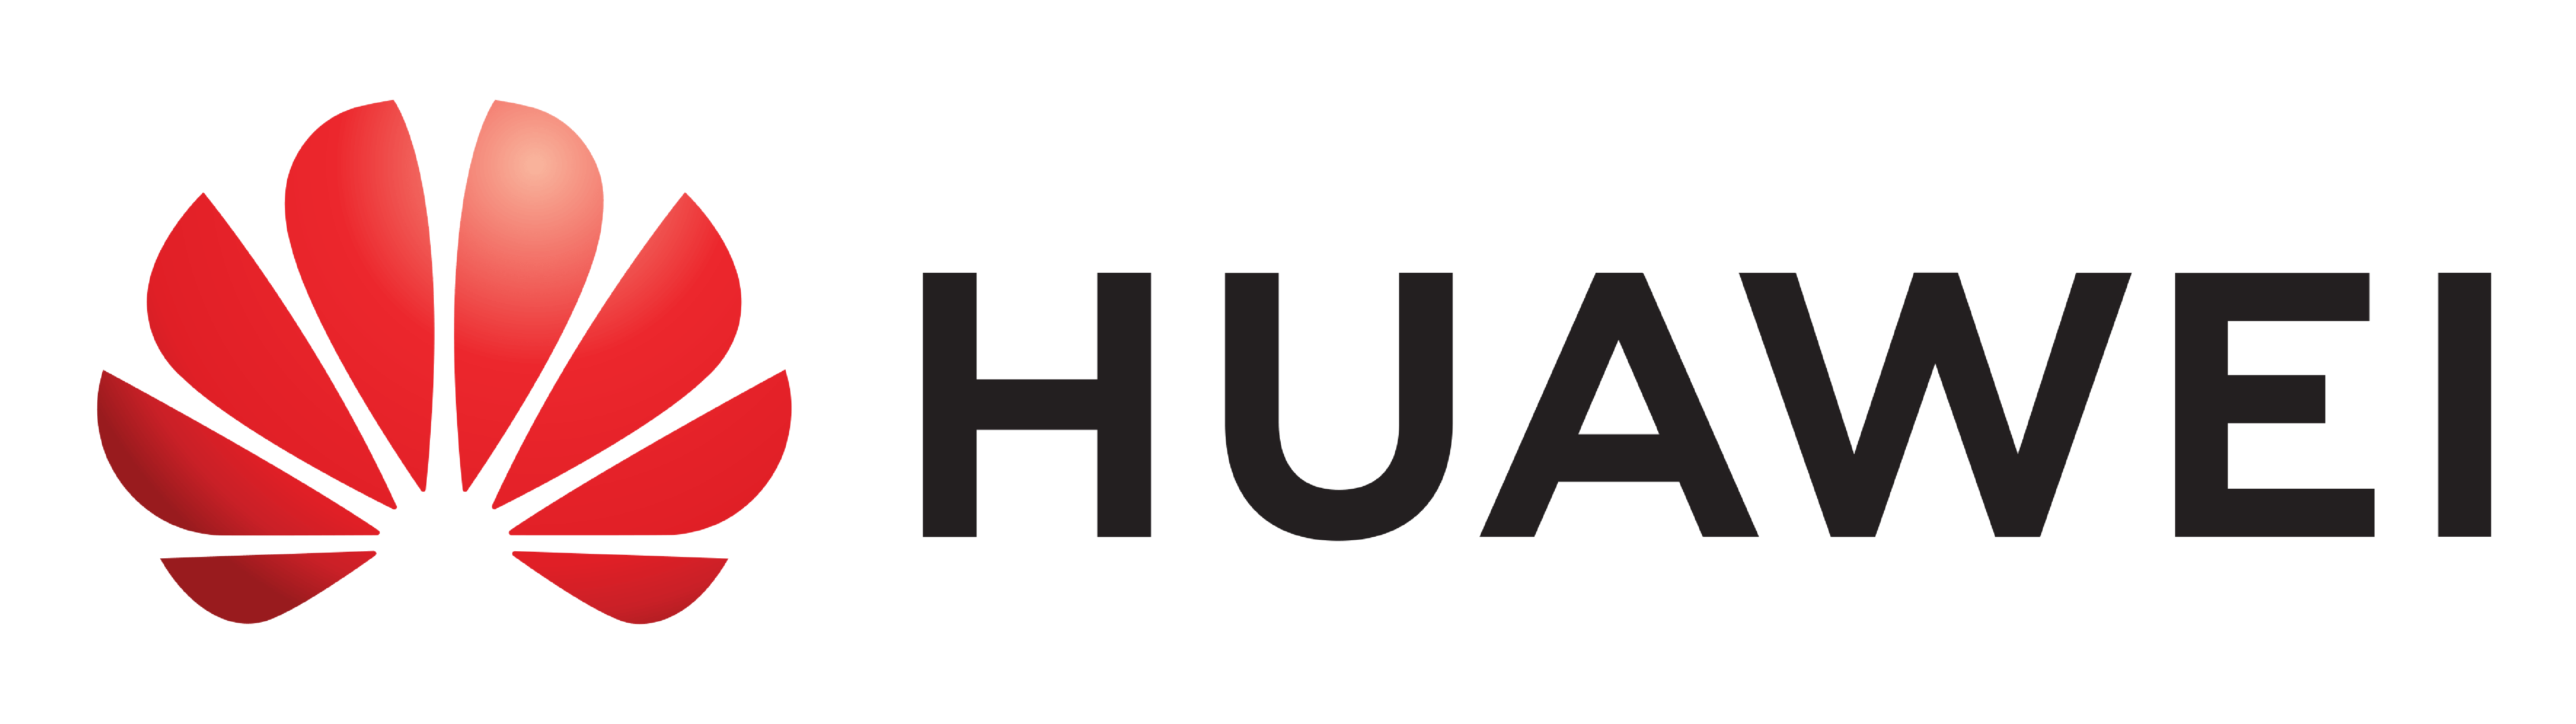 de4.0-huawei's provider logo